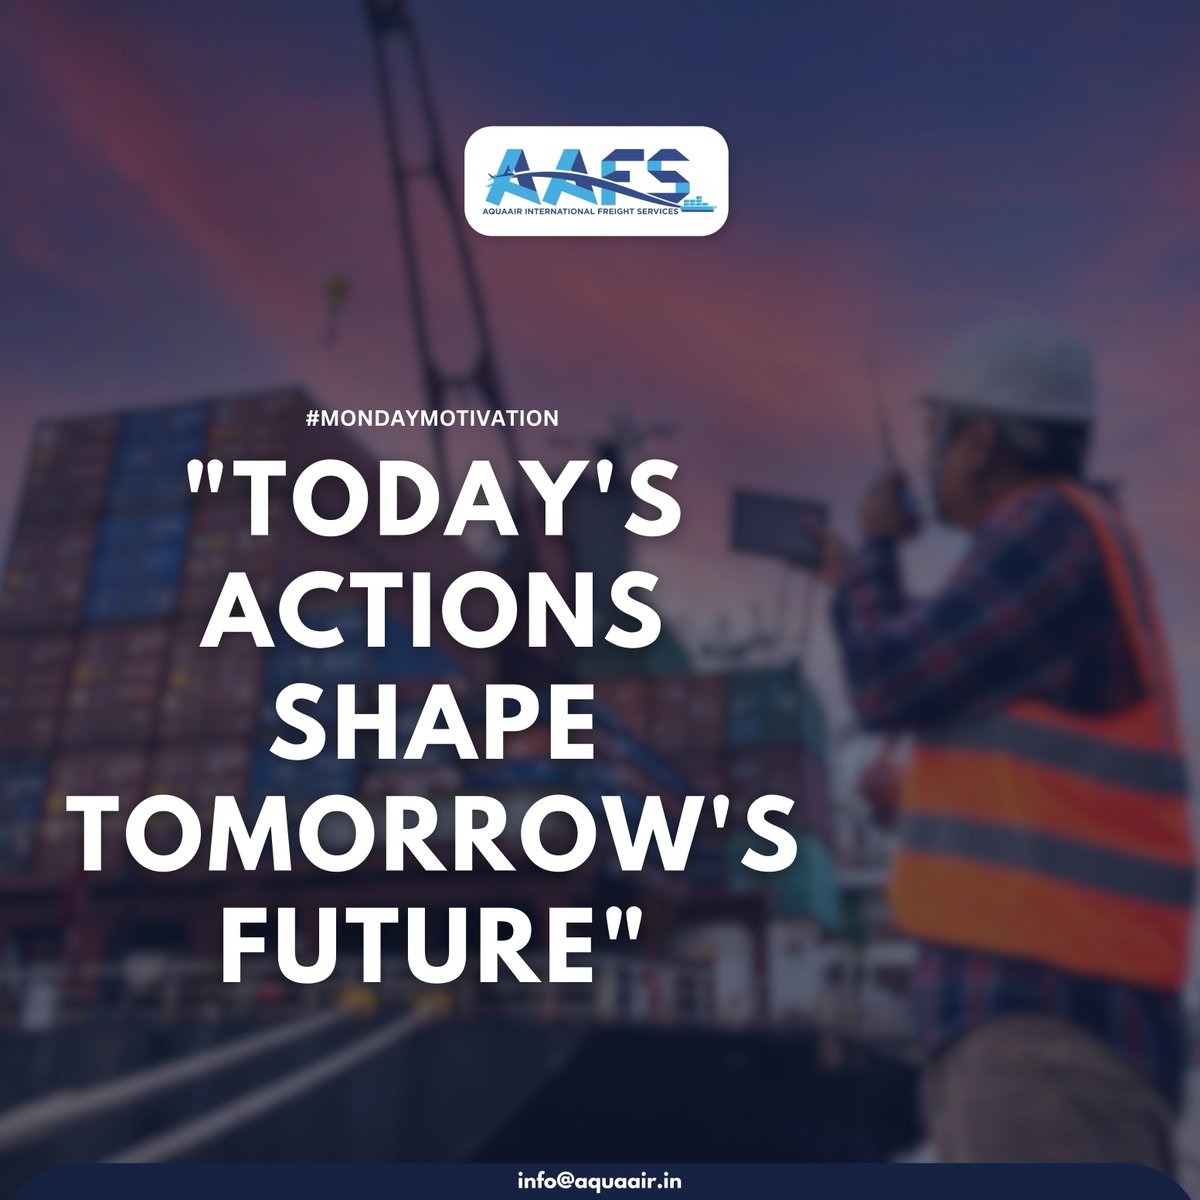 'Charting a Promising Path: Today's Actions Shape Tomorrow's Future'

#mondaymindset #freightforwarding #logistics #shipping #airfreight #aquaair #cargo #seafreight #export #import #aafs #AAFS